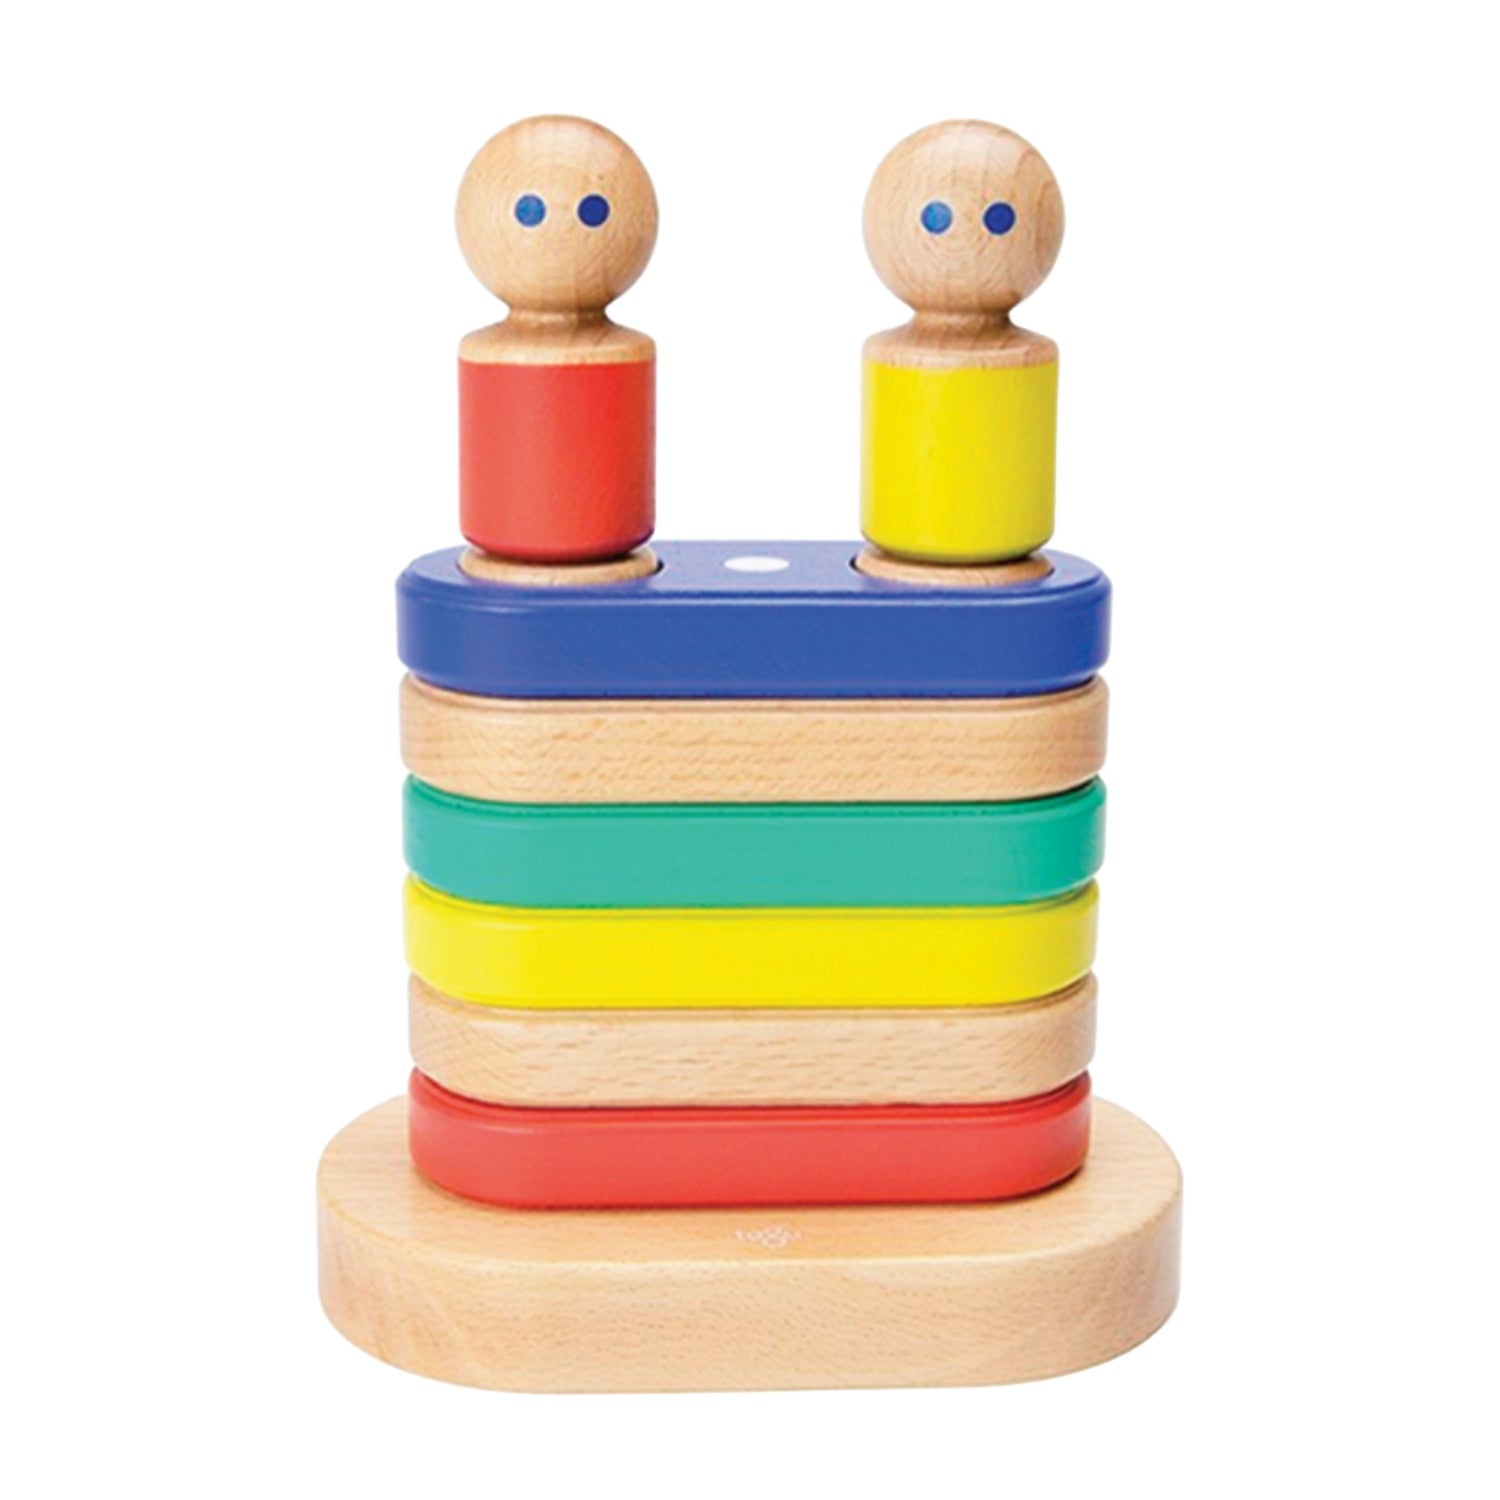 An image of Wooden Toys - Building Blocks - Wooden Blocks | Tegu